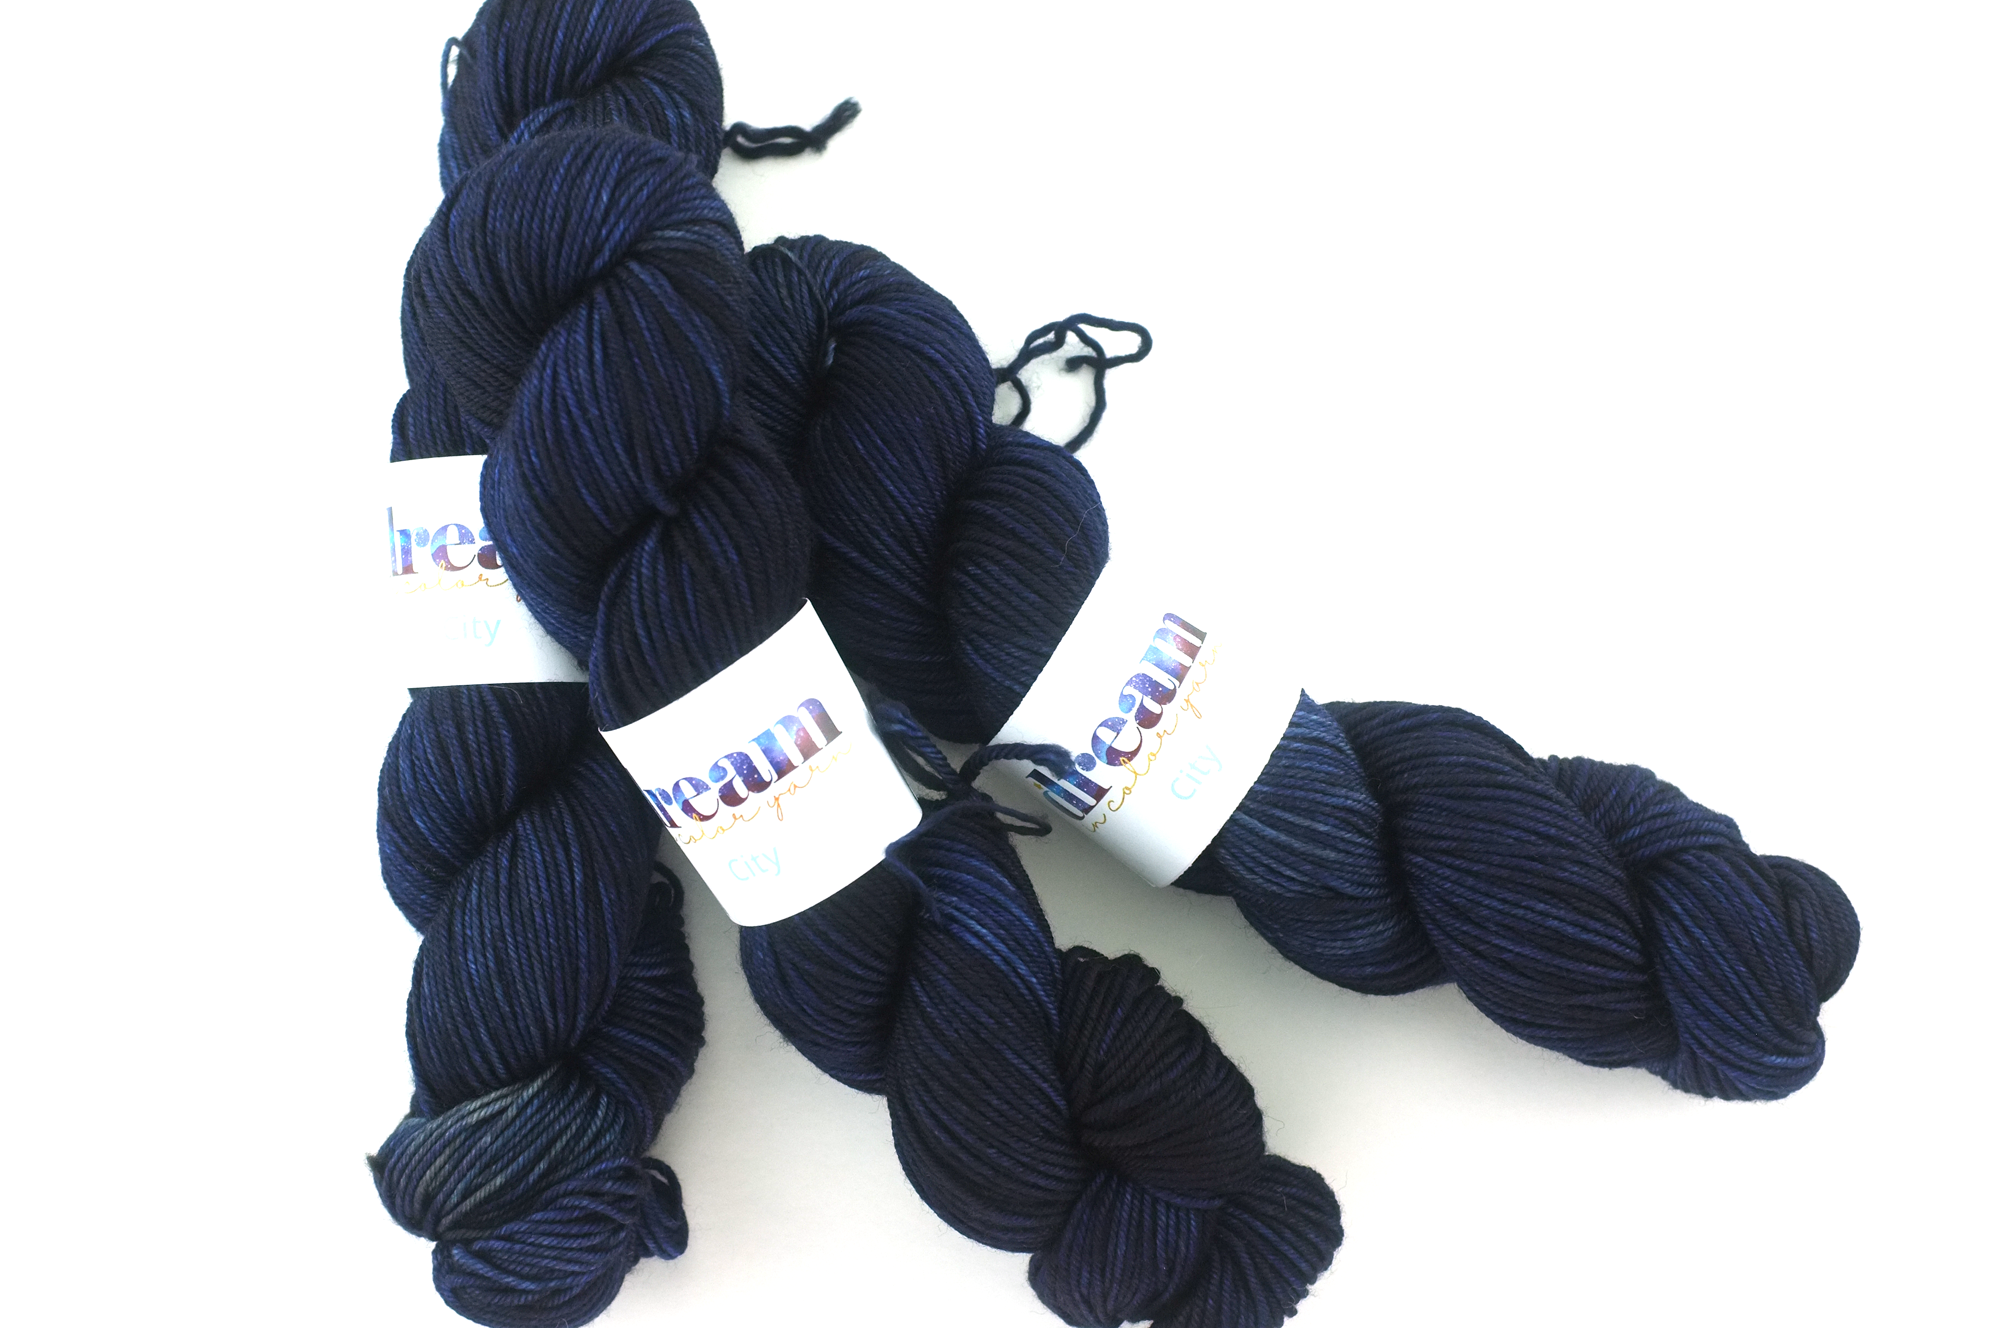 Dream in Color City in color Indigo 724, aran weight superwash wool  knitting yarn, indigo blue shades Red Beauty Textiles